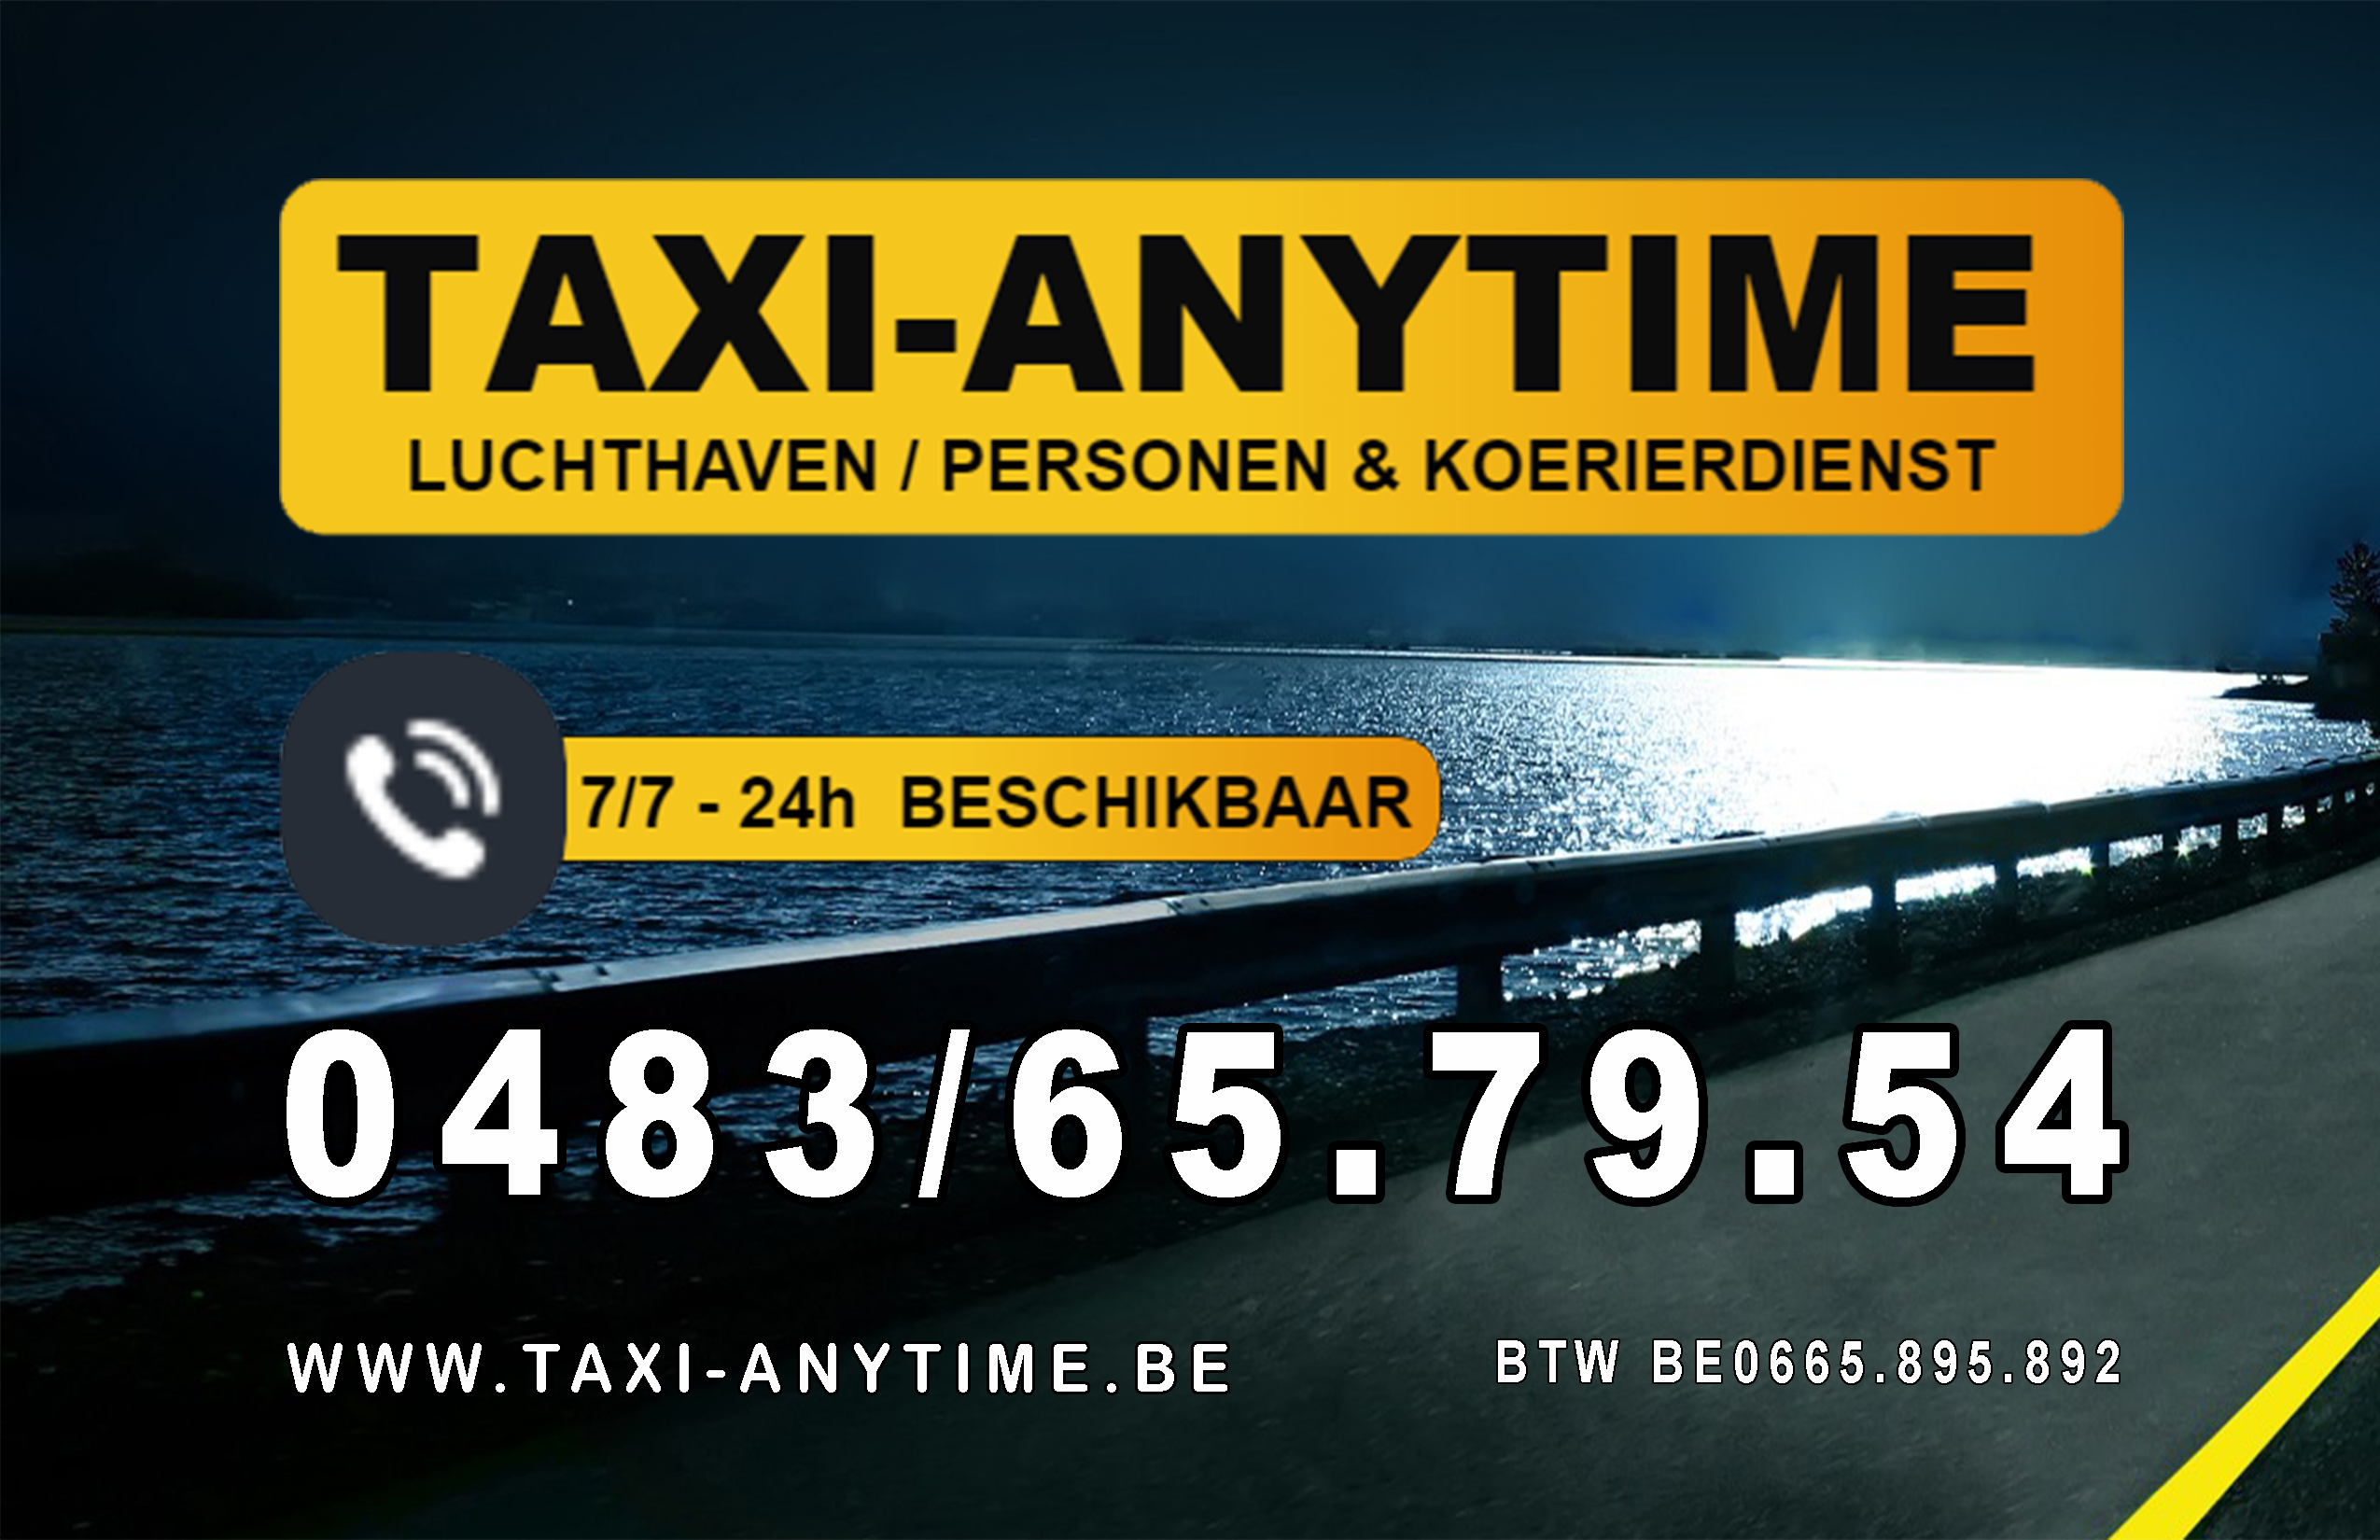 taxibedrijven met luchthavenvervoer Roeselare Taxi-anytime